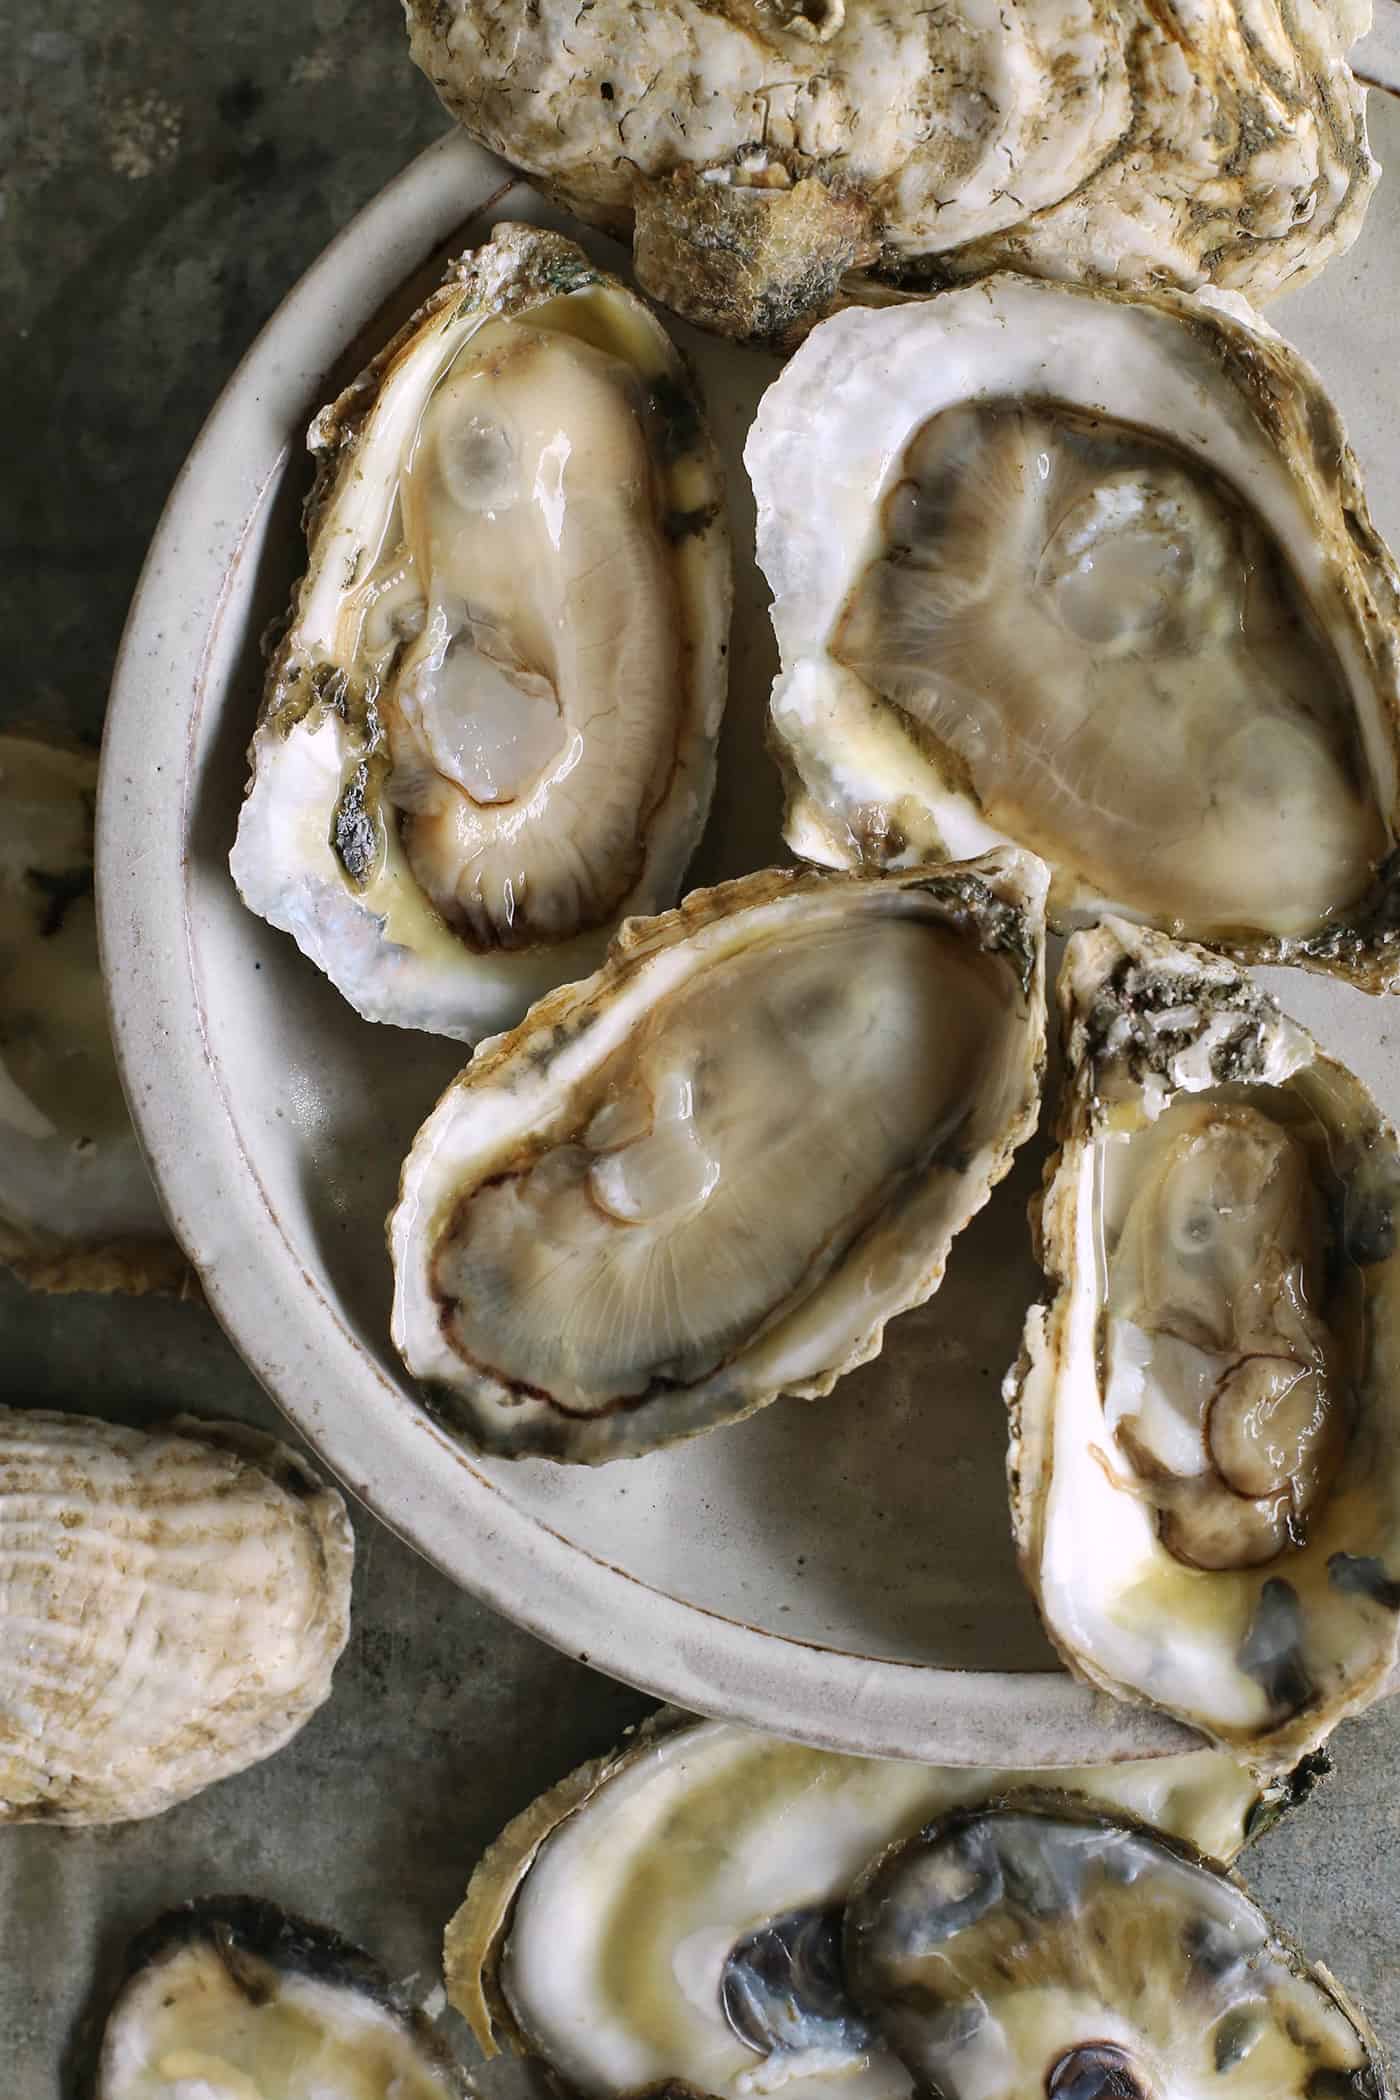 Fresh oysters in their shells